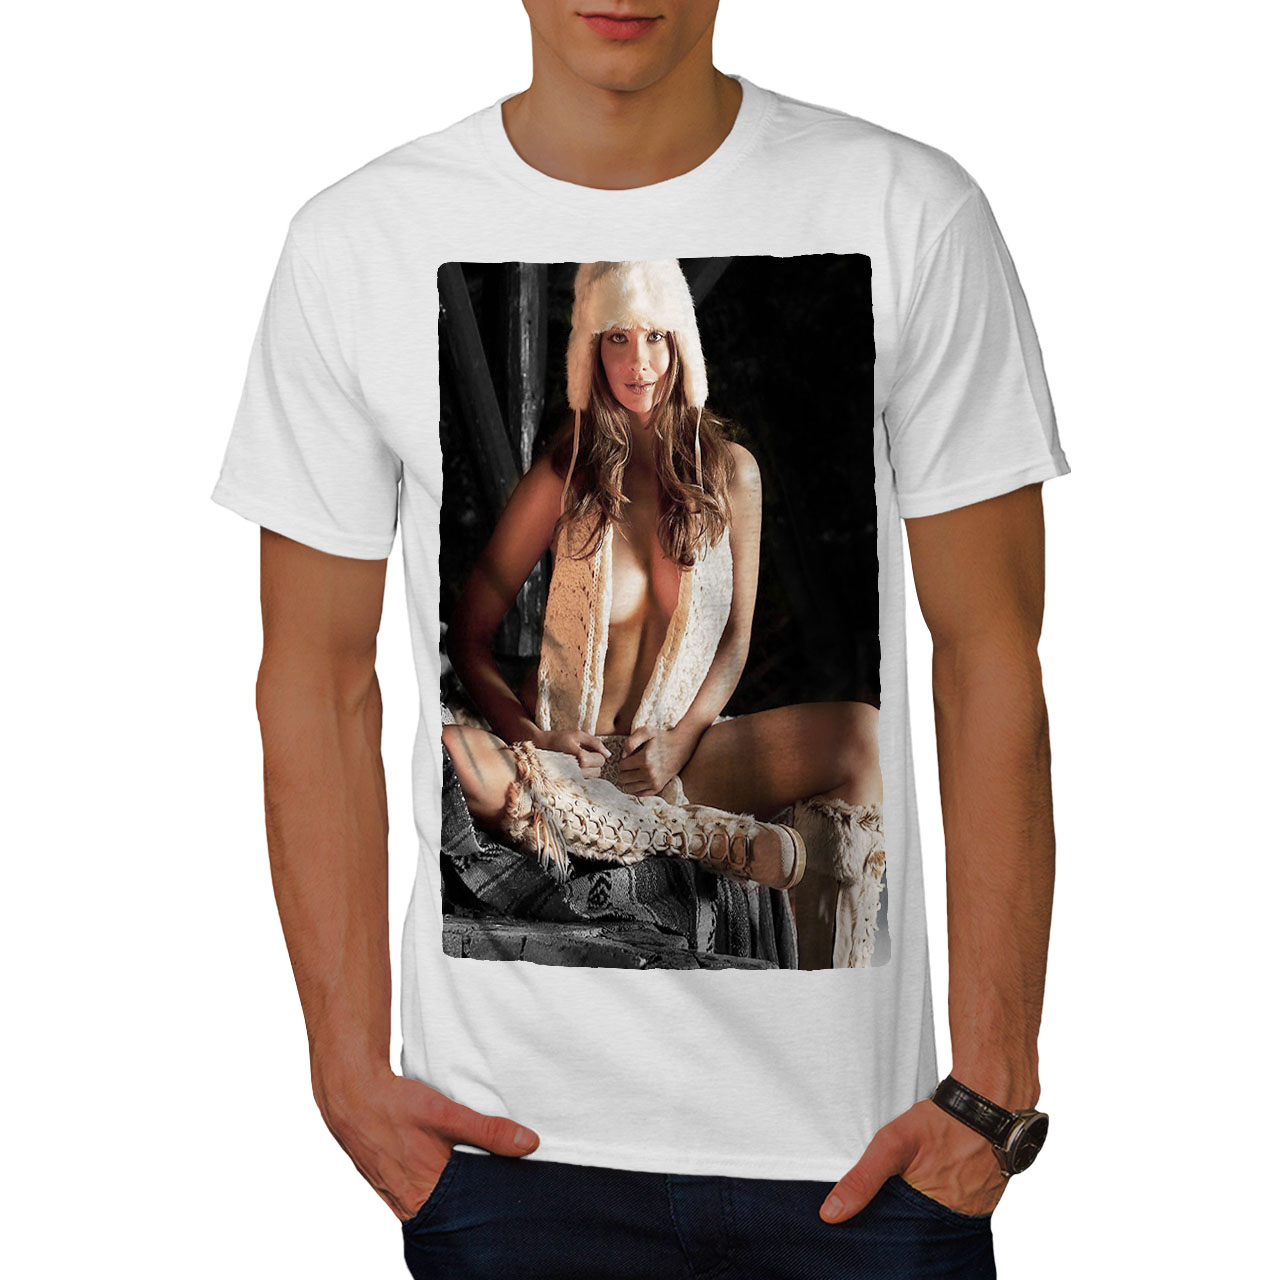 Wellcoda Nude Woman Hot Girl Sexy Mens T-shirt, Lady Graphic